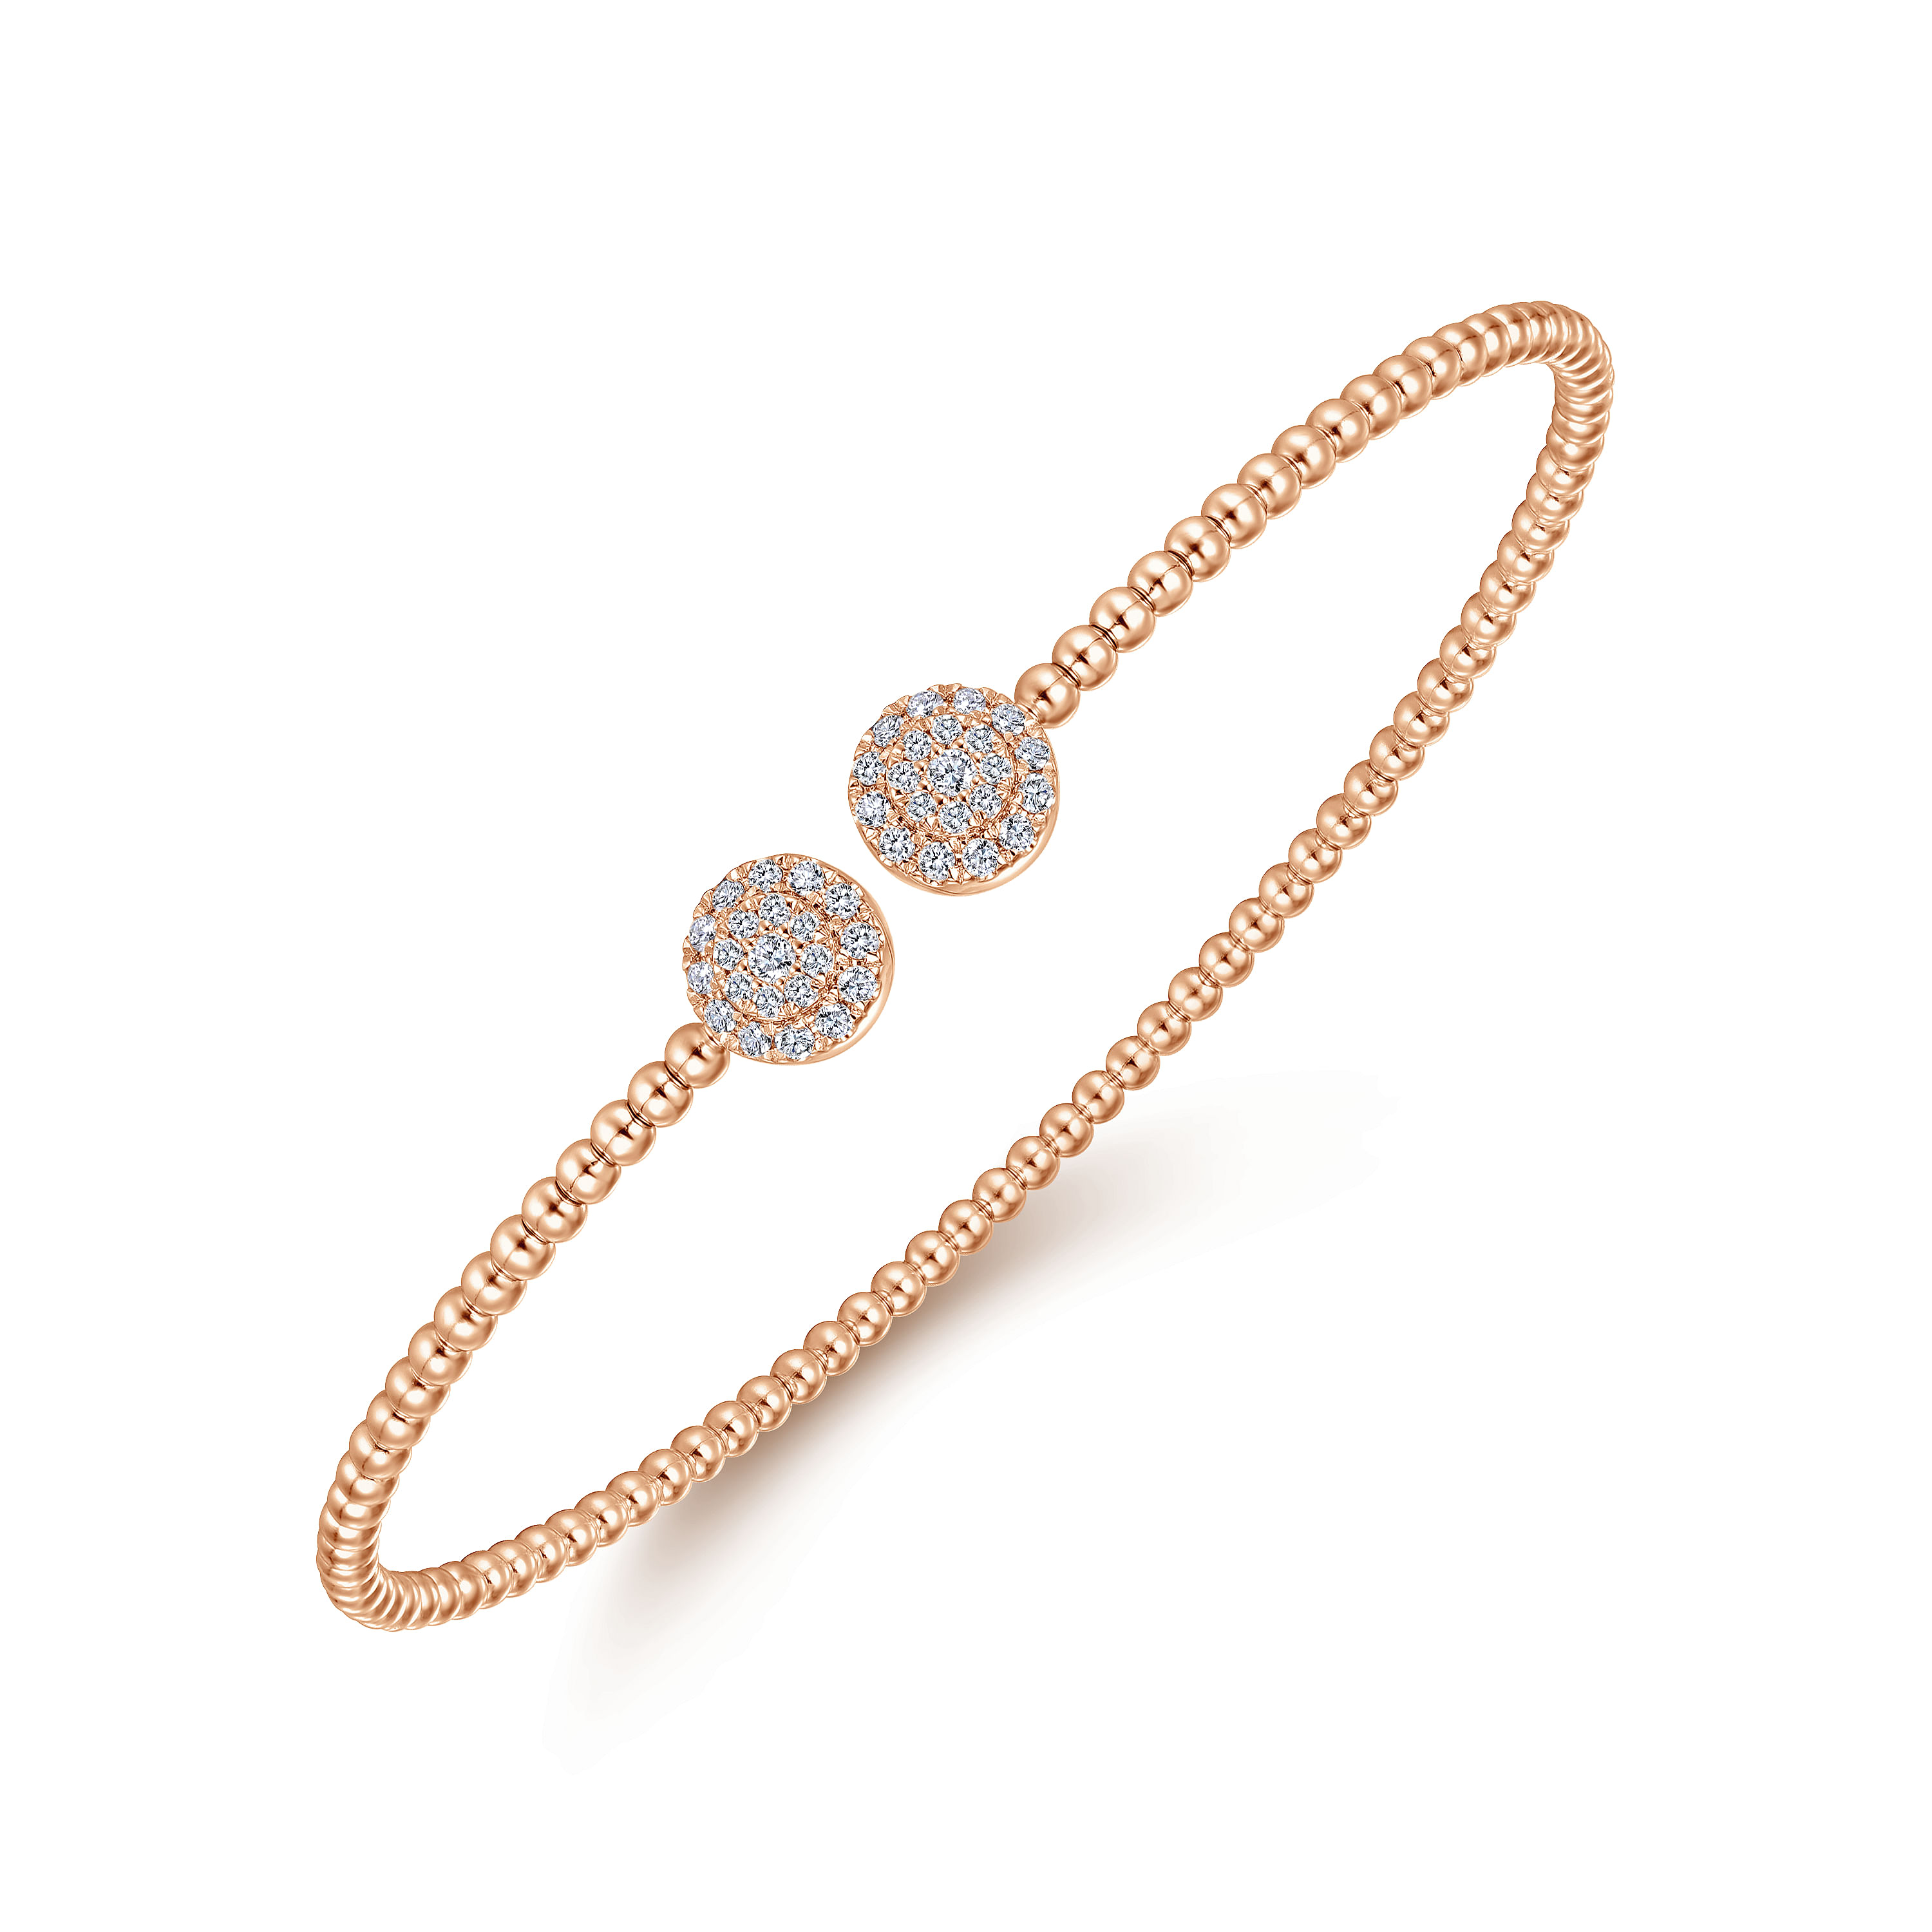 14K Rose Gold Bujukan Bead Split Cuff Bracelet with Round Pavé Diamond Discs